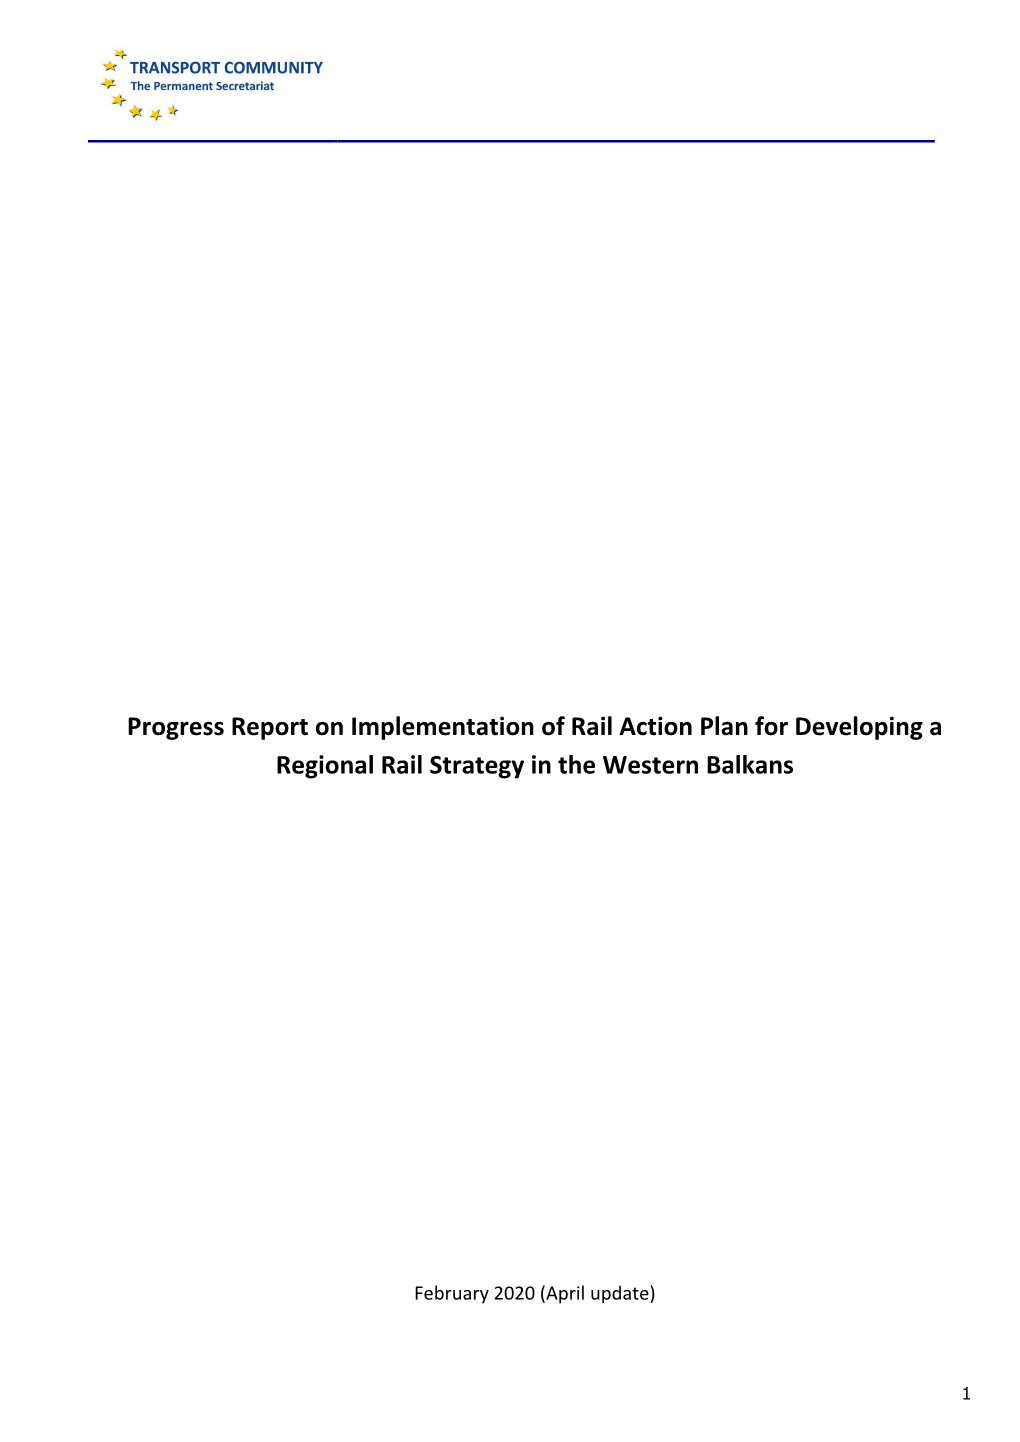 Progress Report on Implementation of Rail Action Plan (April Update)